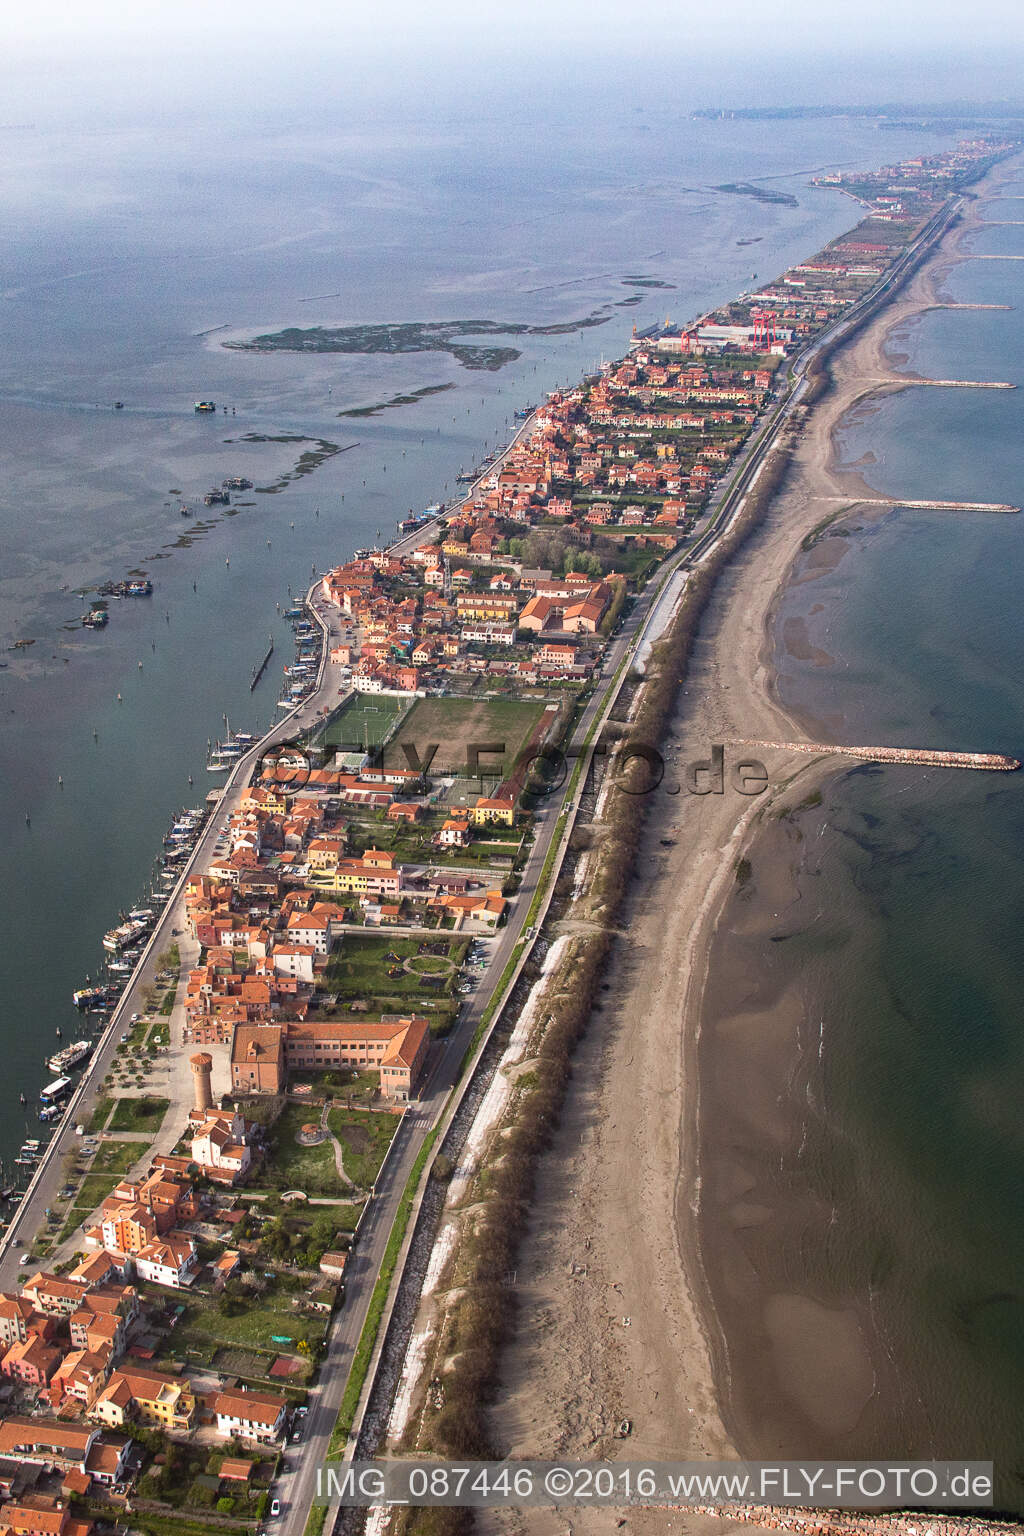 Settlement area in the district Pellestrina in Venedig in Venetien, Italy seen from a drone